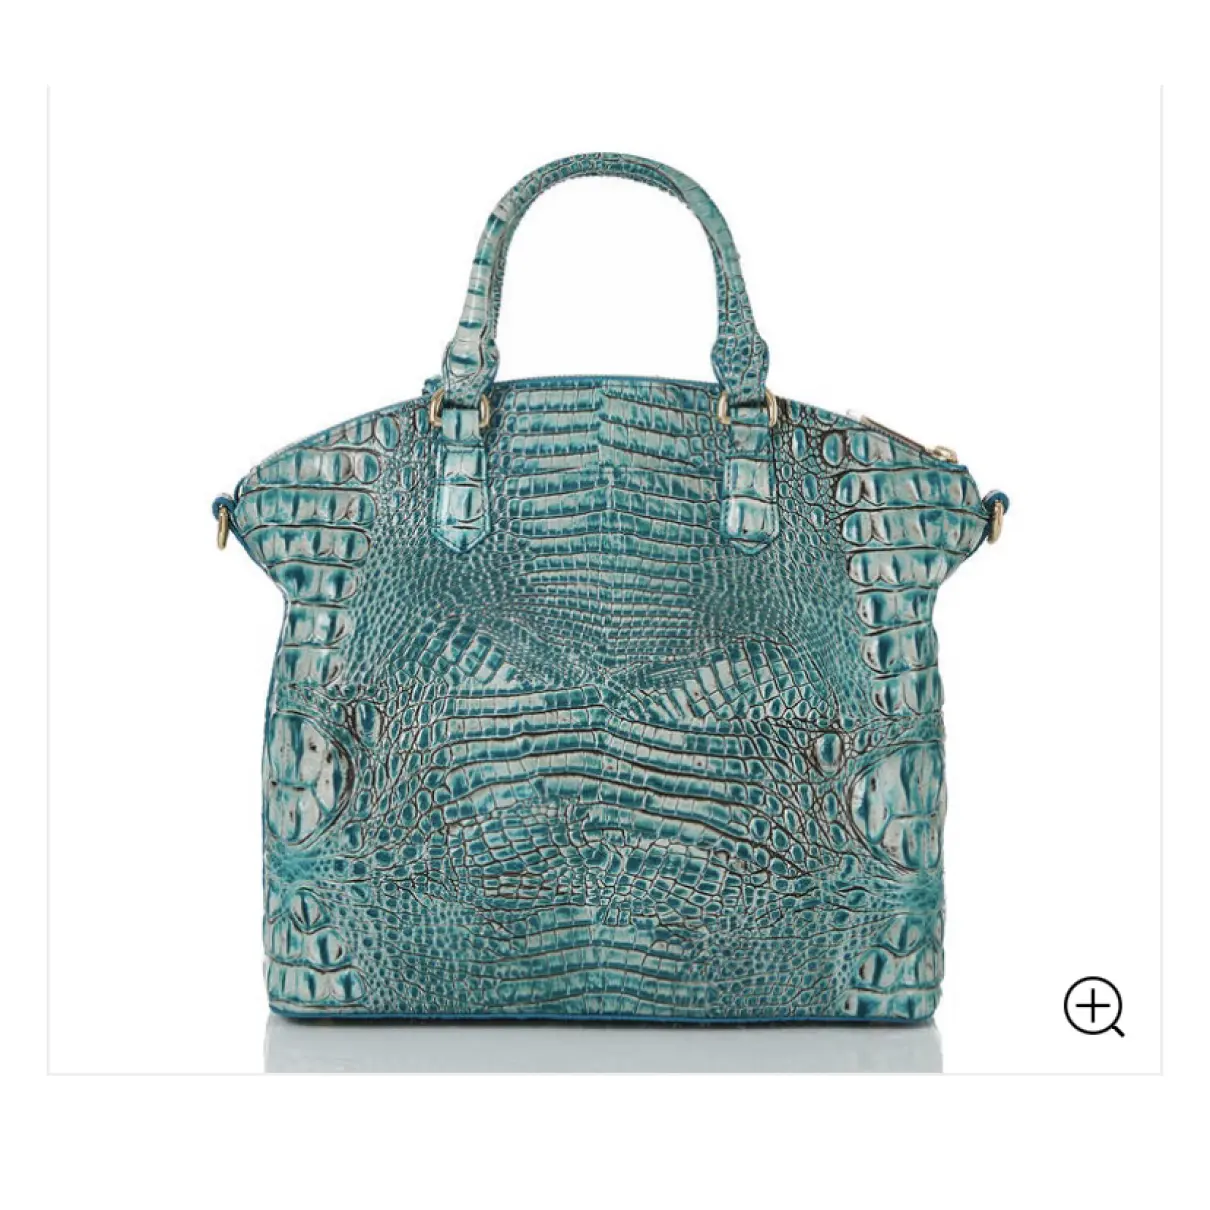 Buy Brahmin Leather handbag online